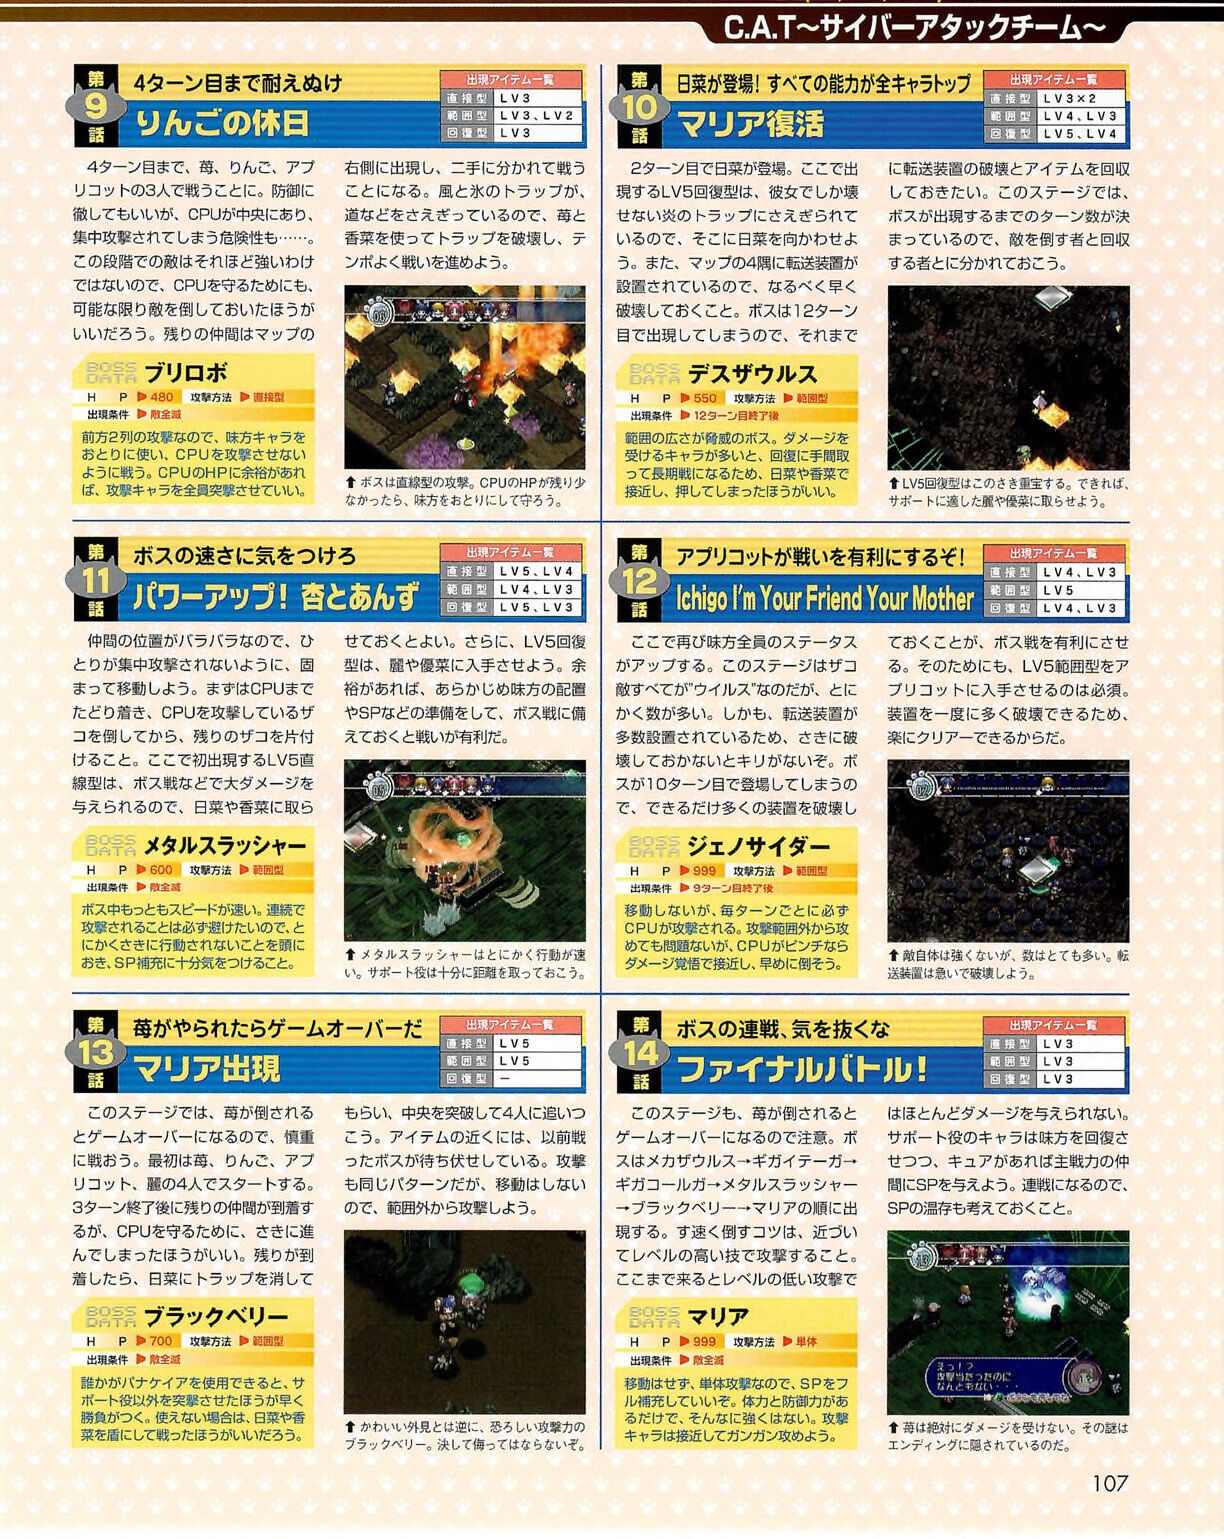 Famitsu Xbox 2003-09 106